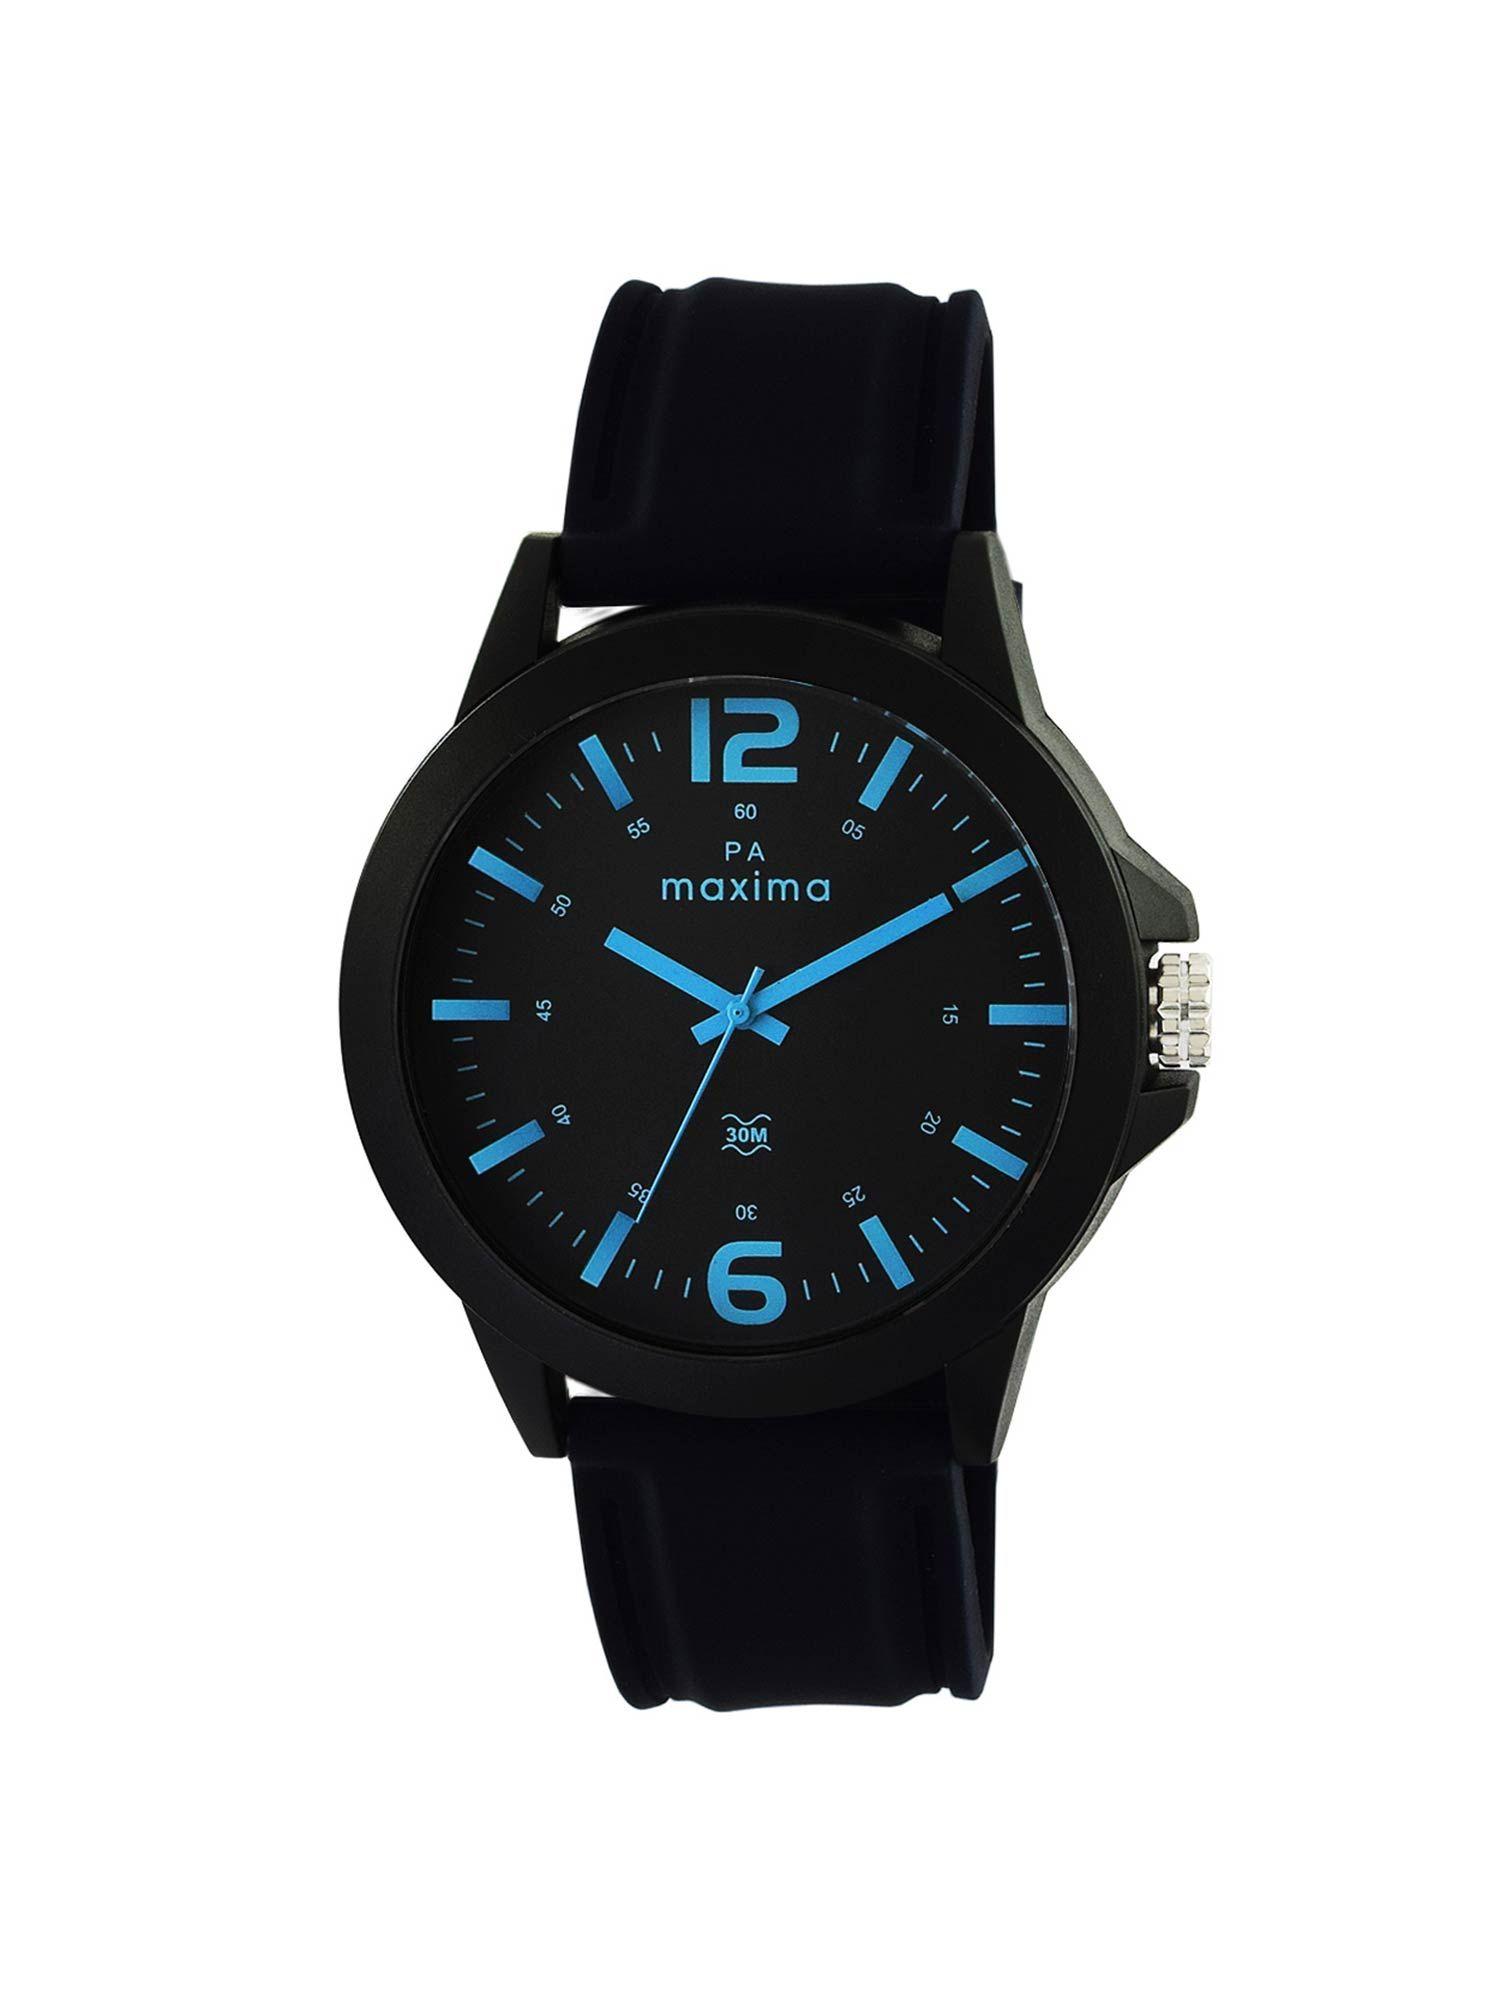 aqua analog watch for men in black dial color